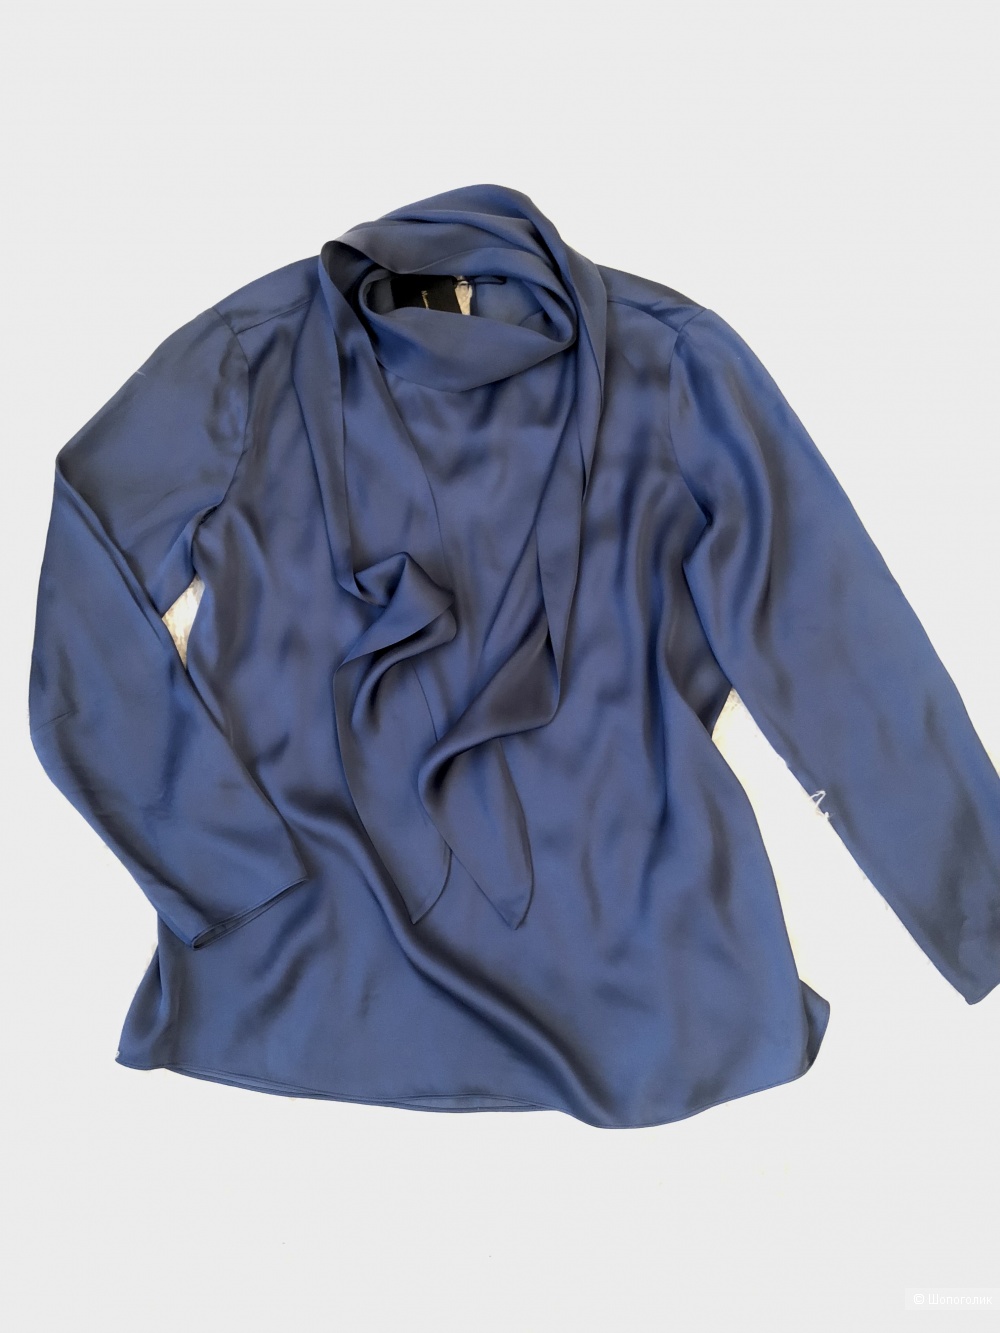 Блуза Massimo Dutti (38)44 размер.